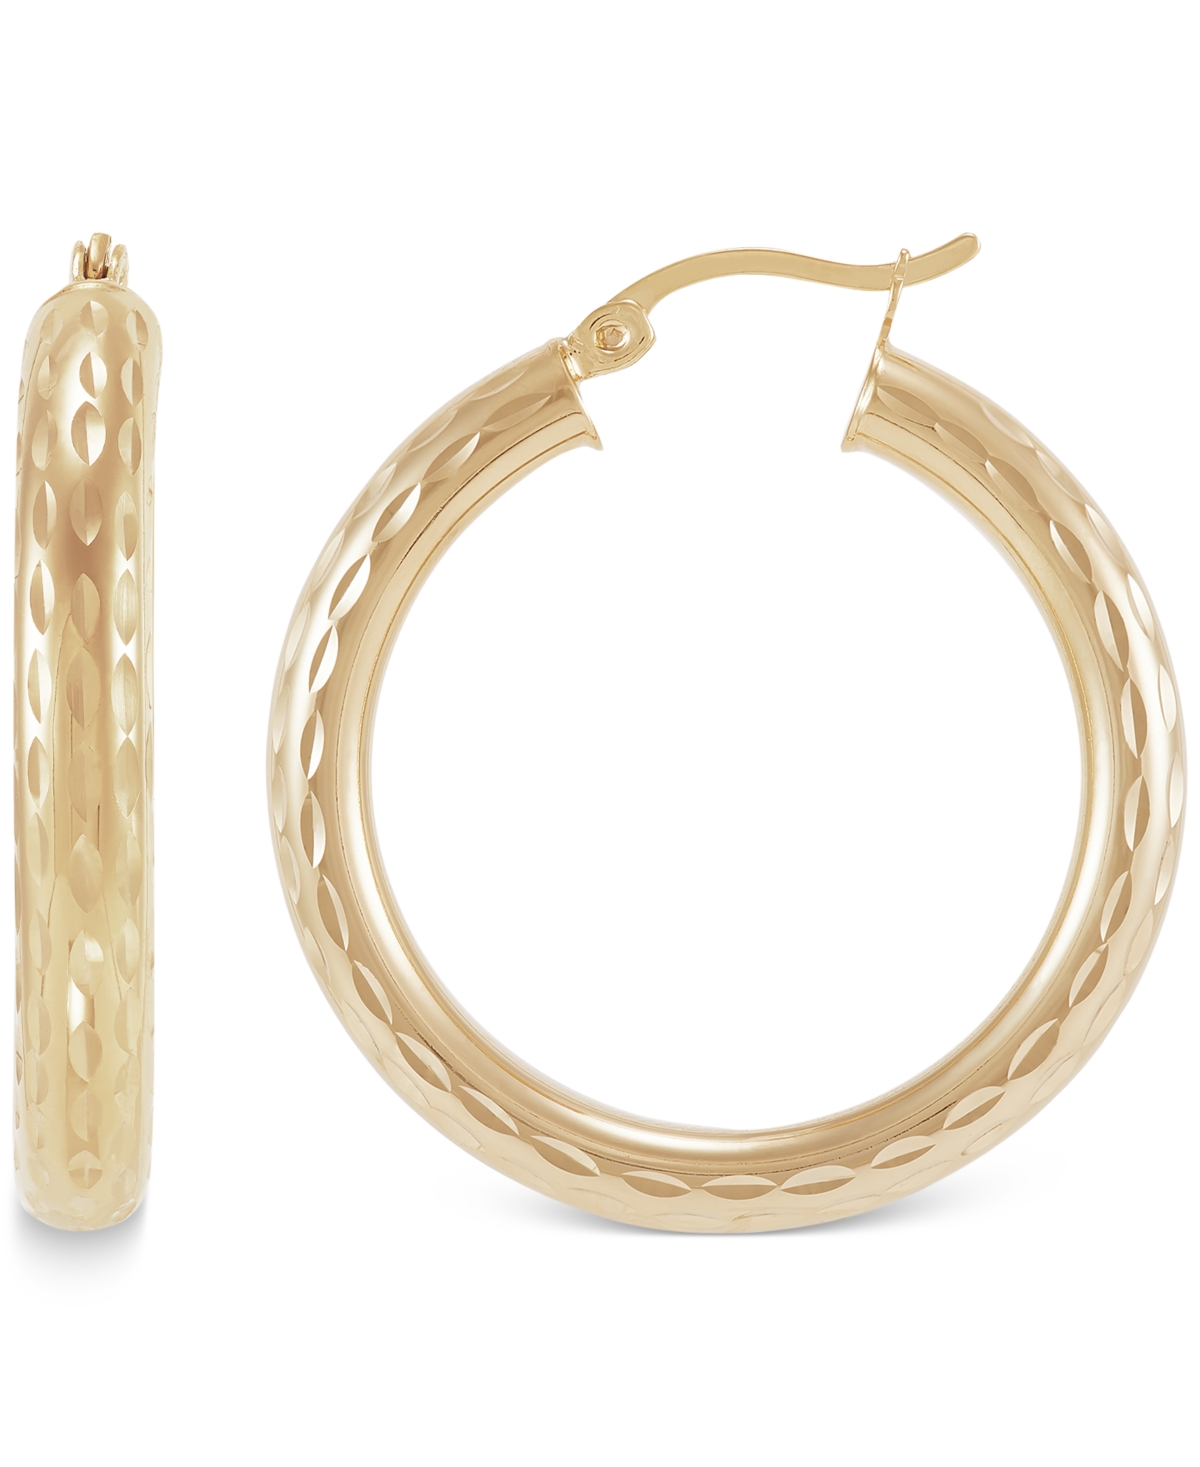 Giani Bernini Textured Tube Medium Hoop Earrings, 30mm, Created For Macy's In Gold Over Silver